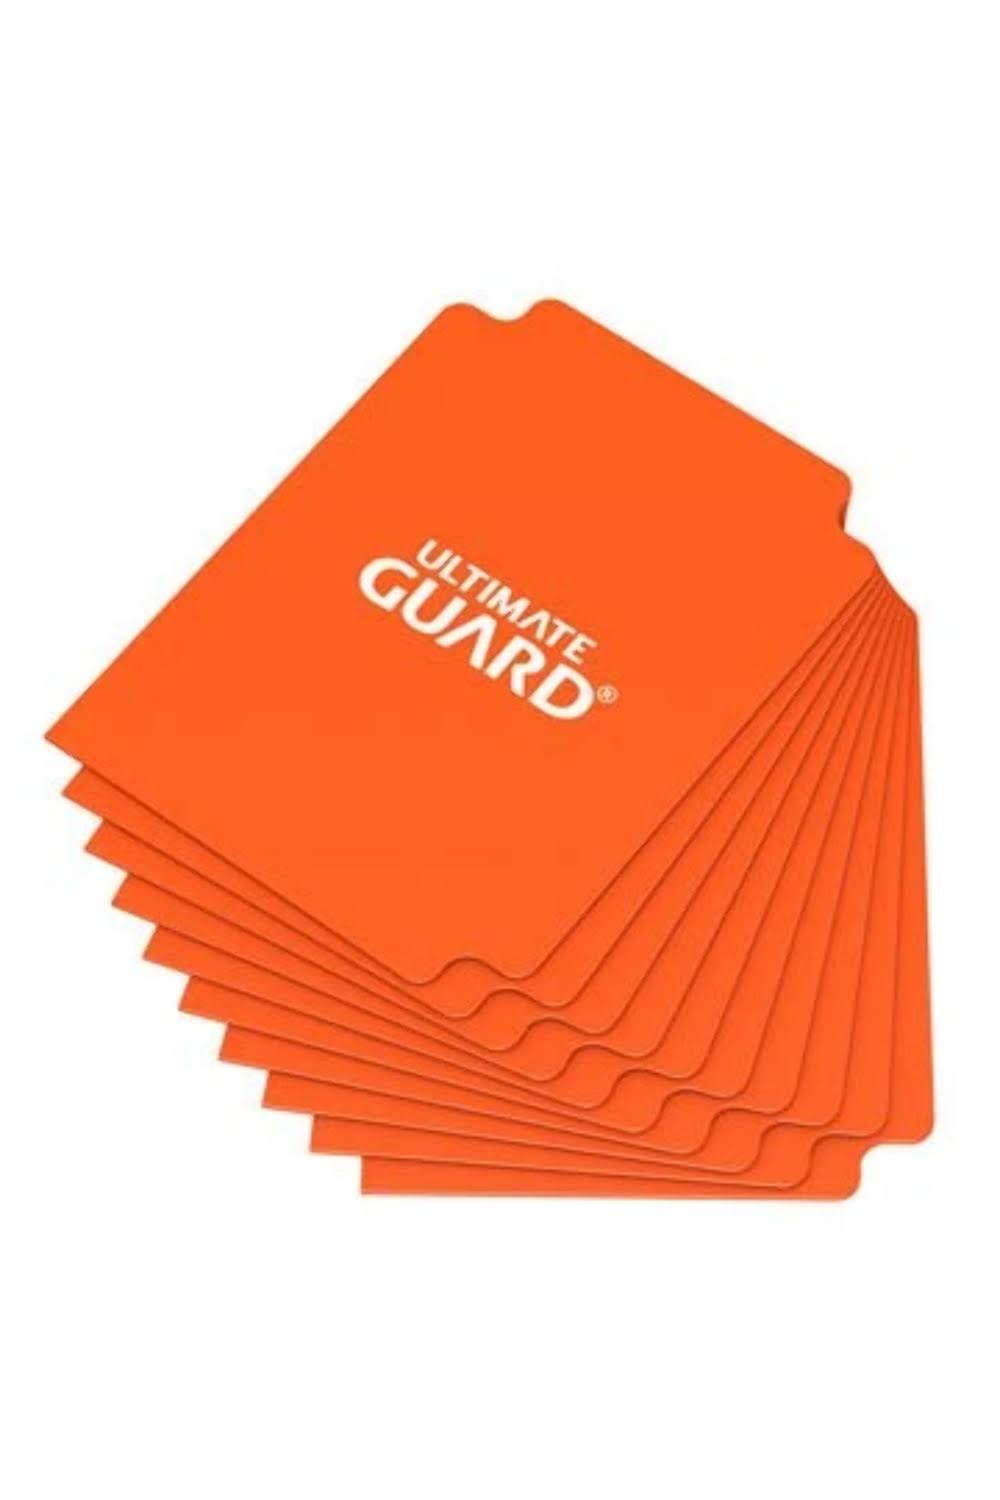 Ultimate Guard Card Dividers - Orange, 10 Units